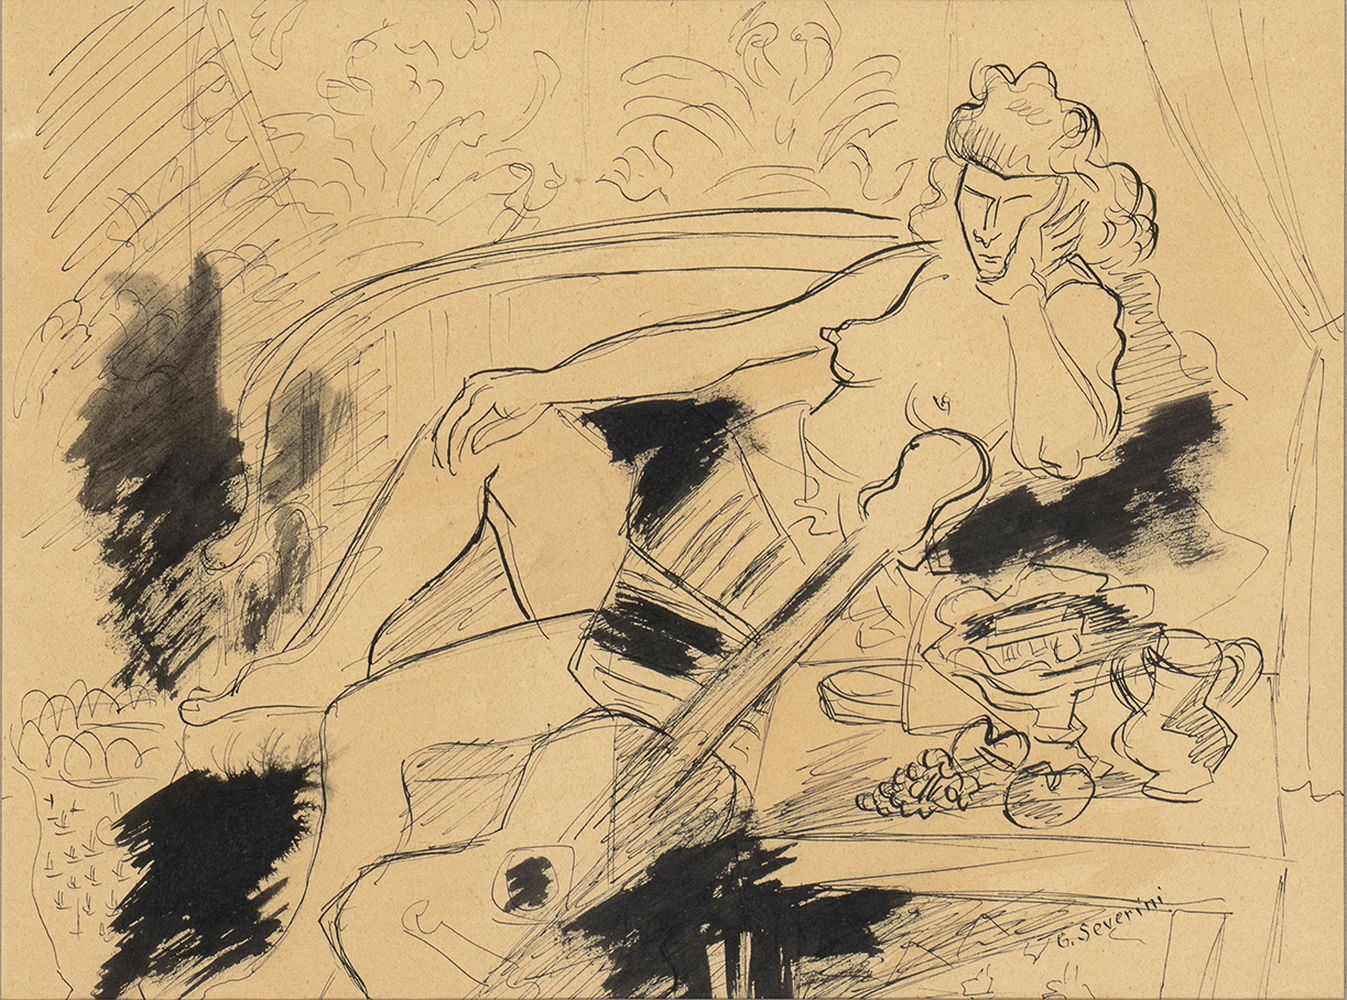 GINO SEVERINI (Cortona, 1883 - Paris, 1966): Female nude, 1941/1942. ca.